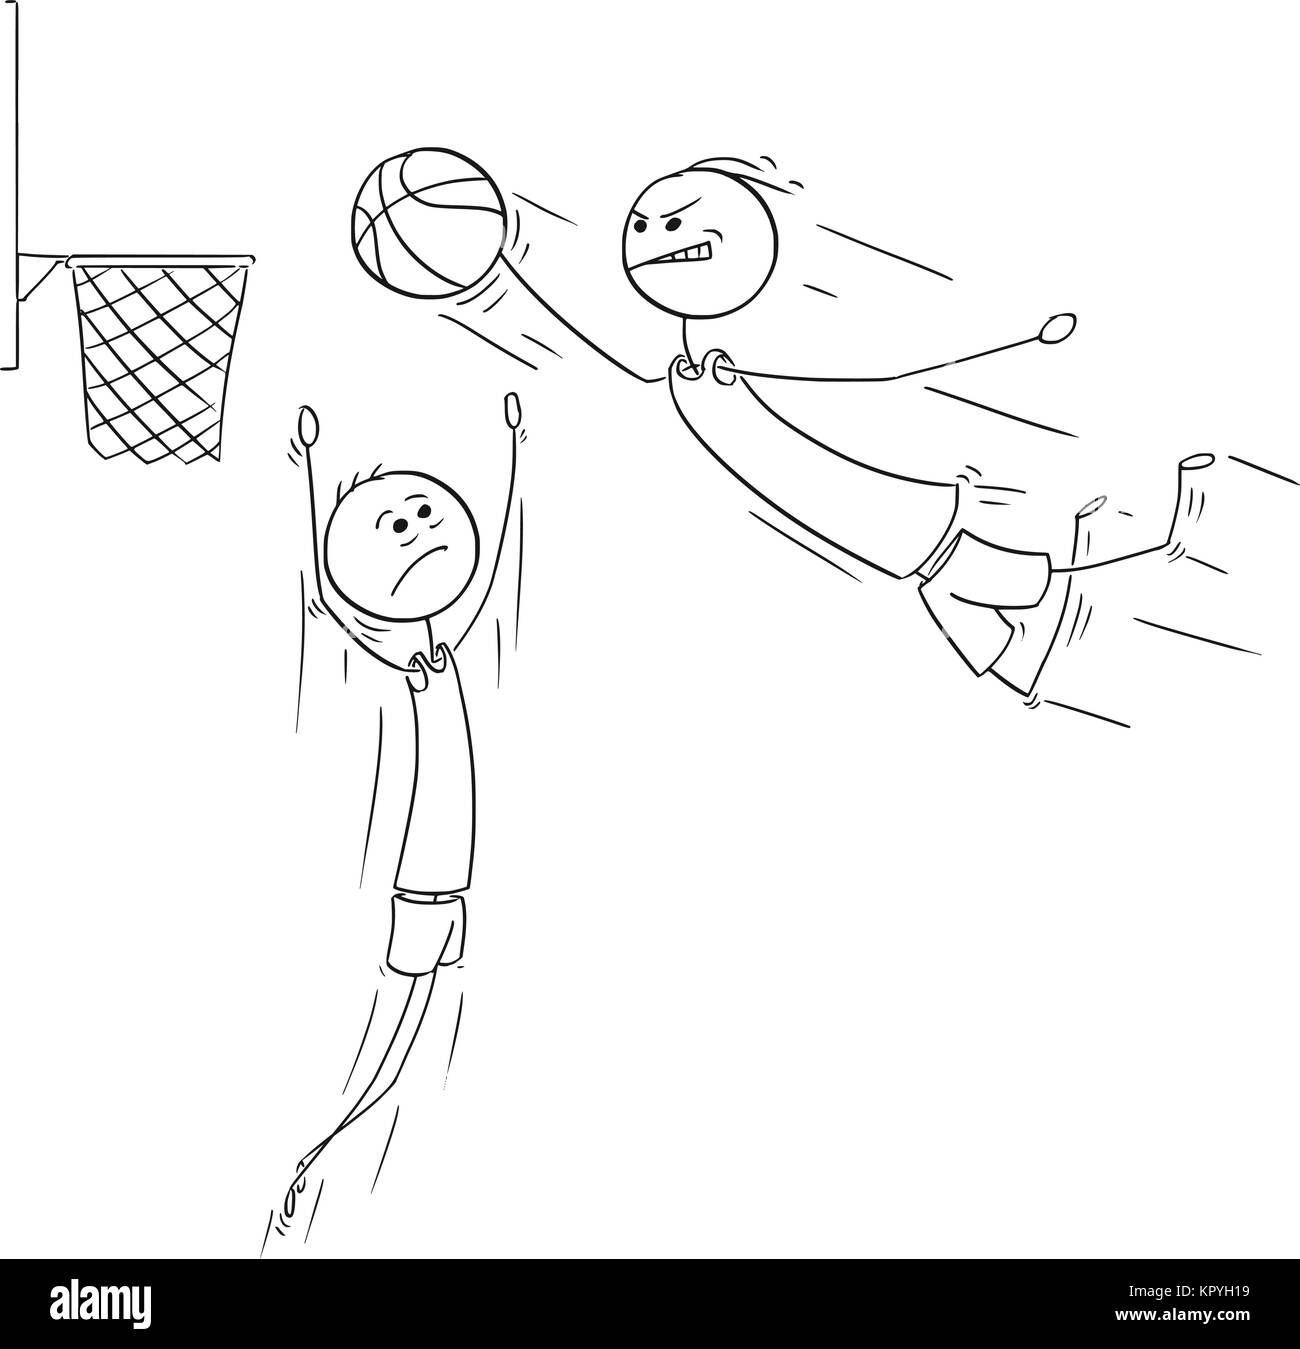 Cartoon stick man drawing illustration of basketball player jumping and  scoring goal Stock Vector Image & Art - Alamy